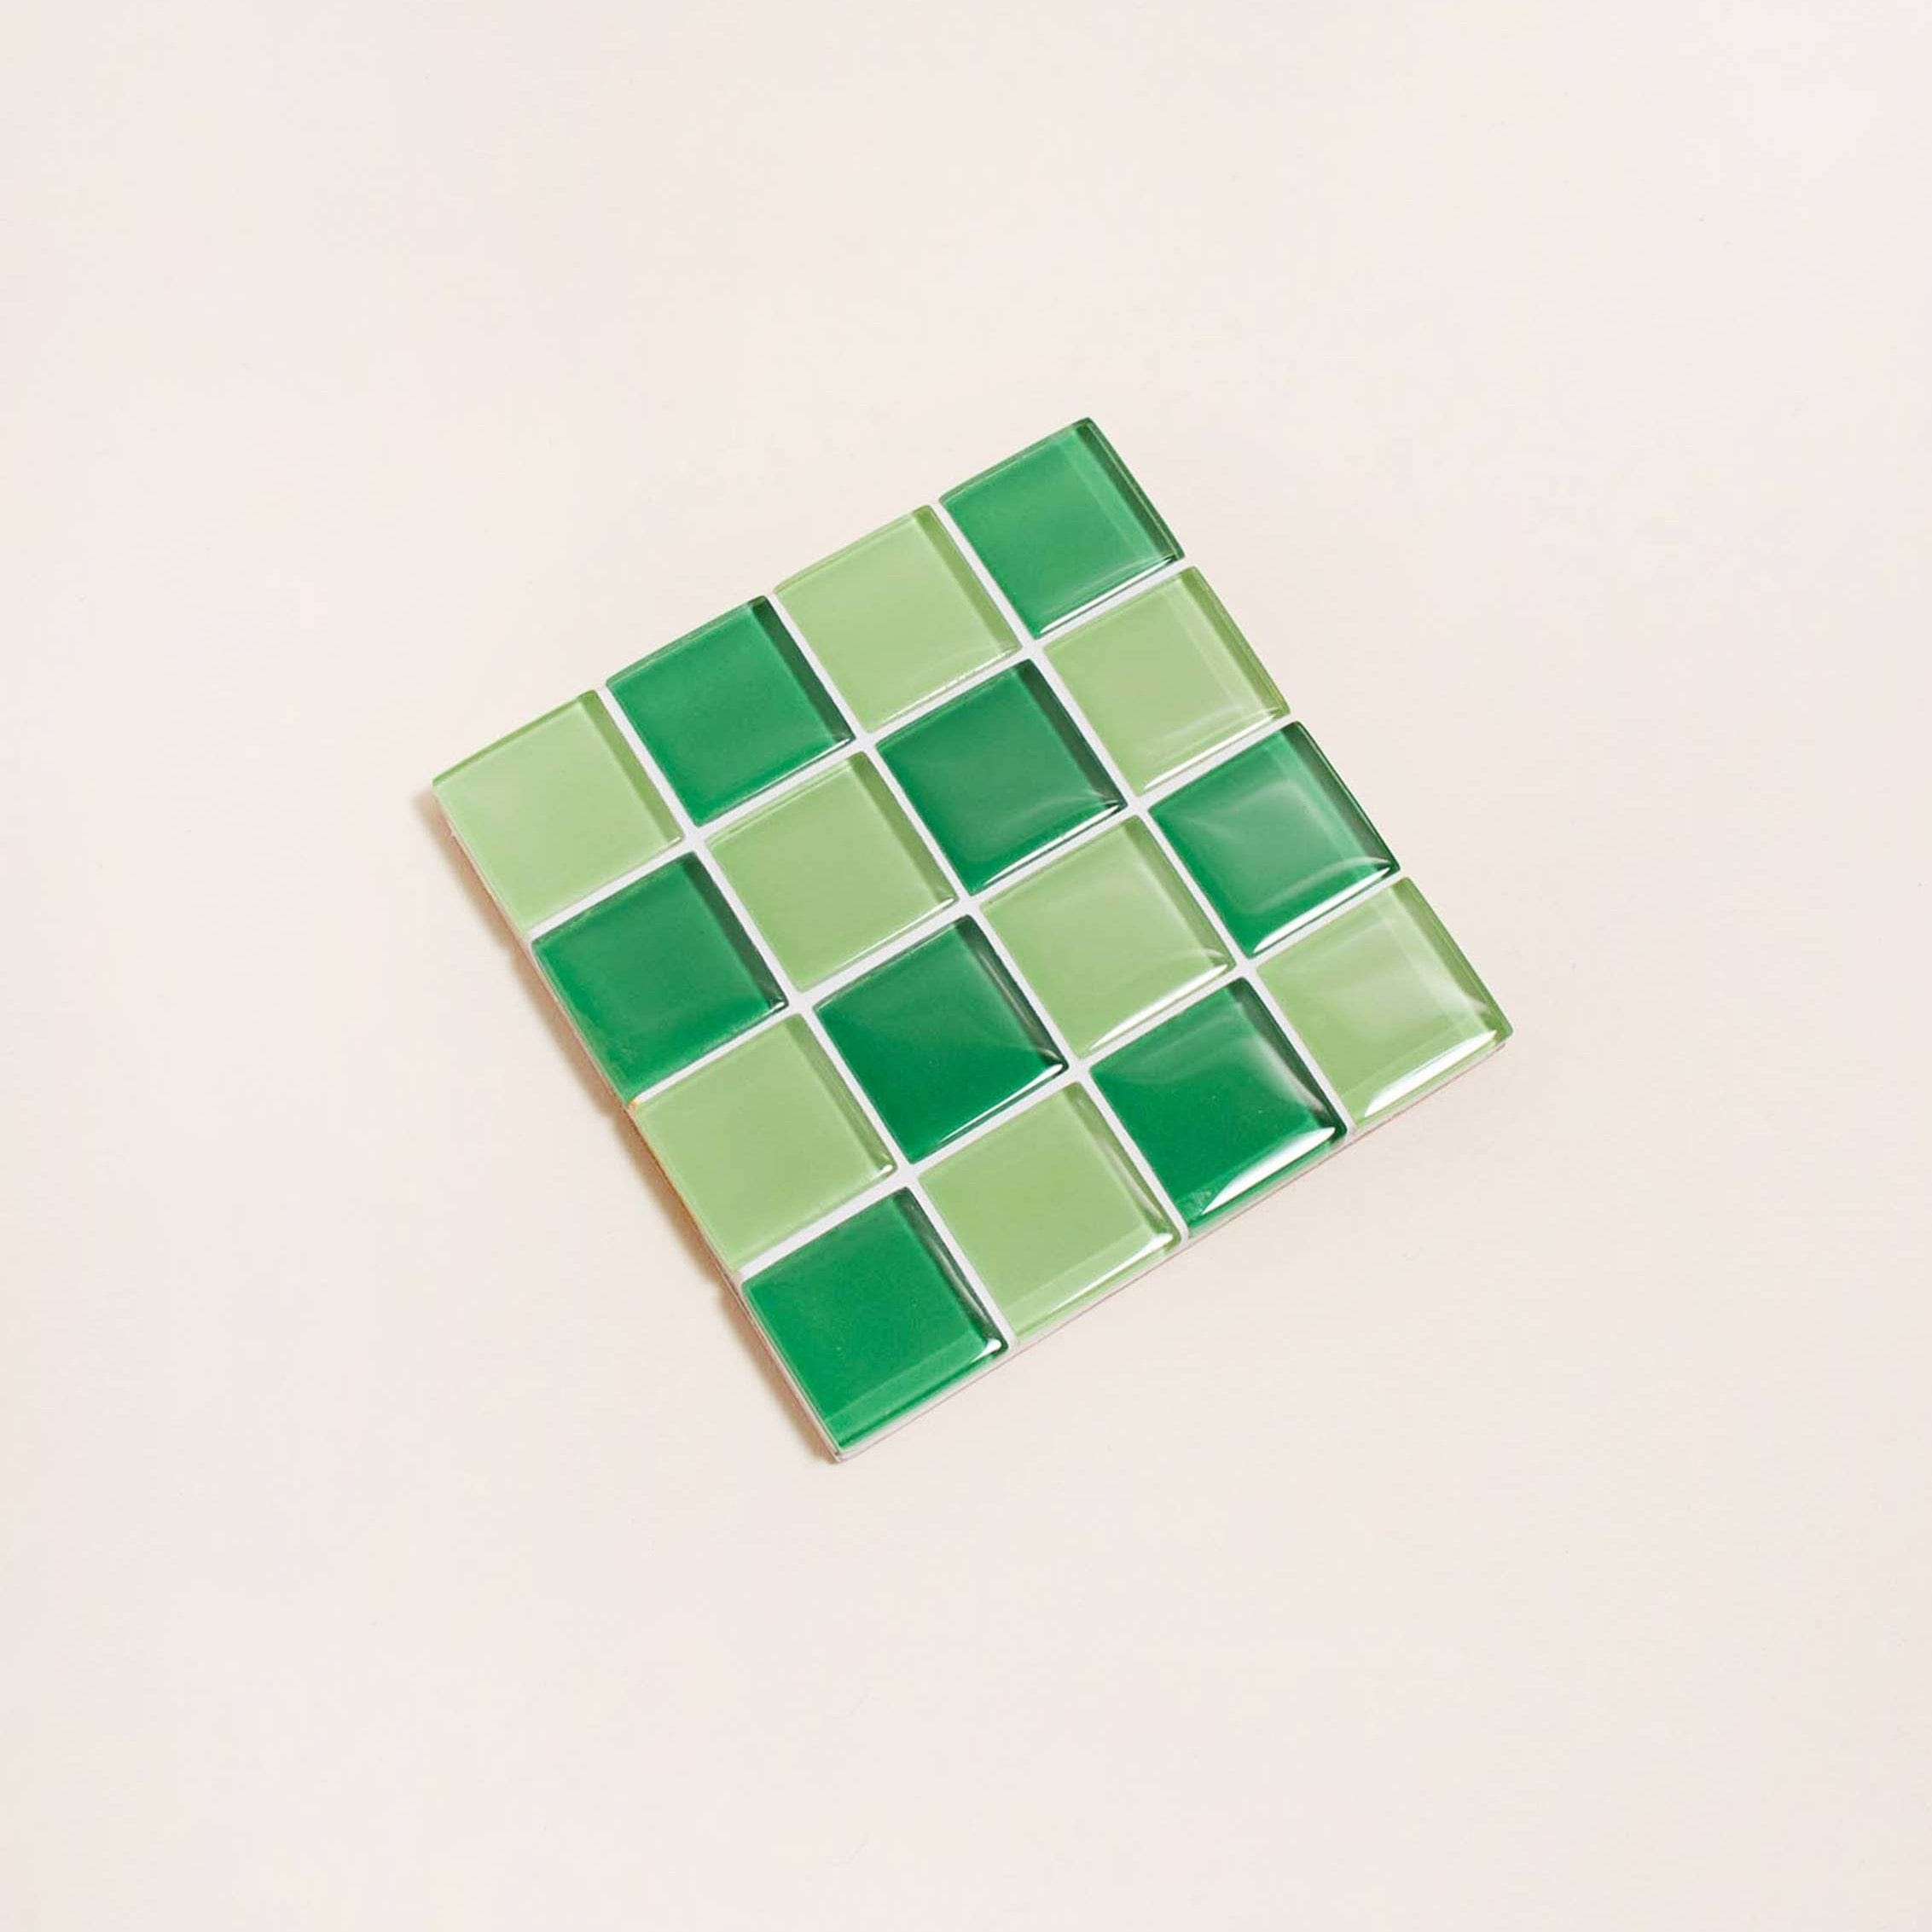 Glass Tile Coaster - Green Apple by Subtle Art Studios